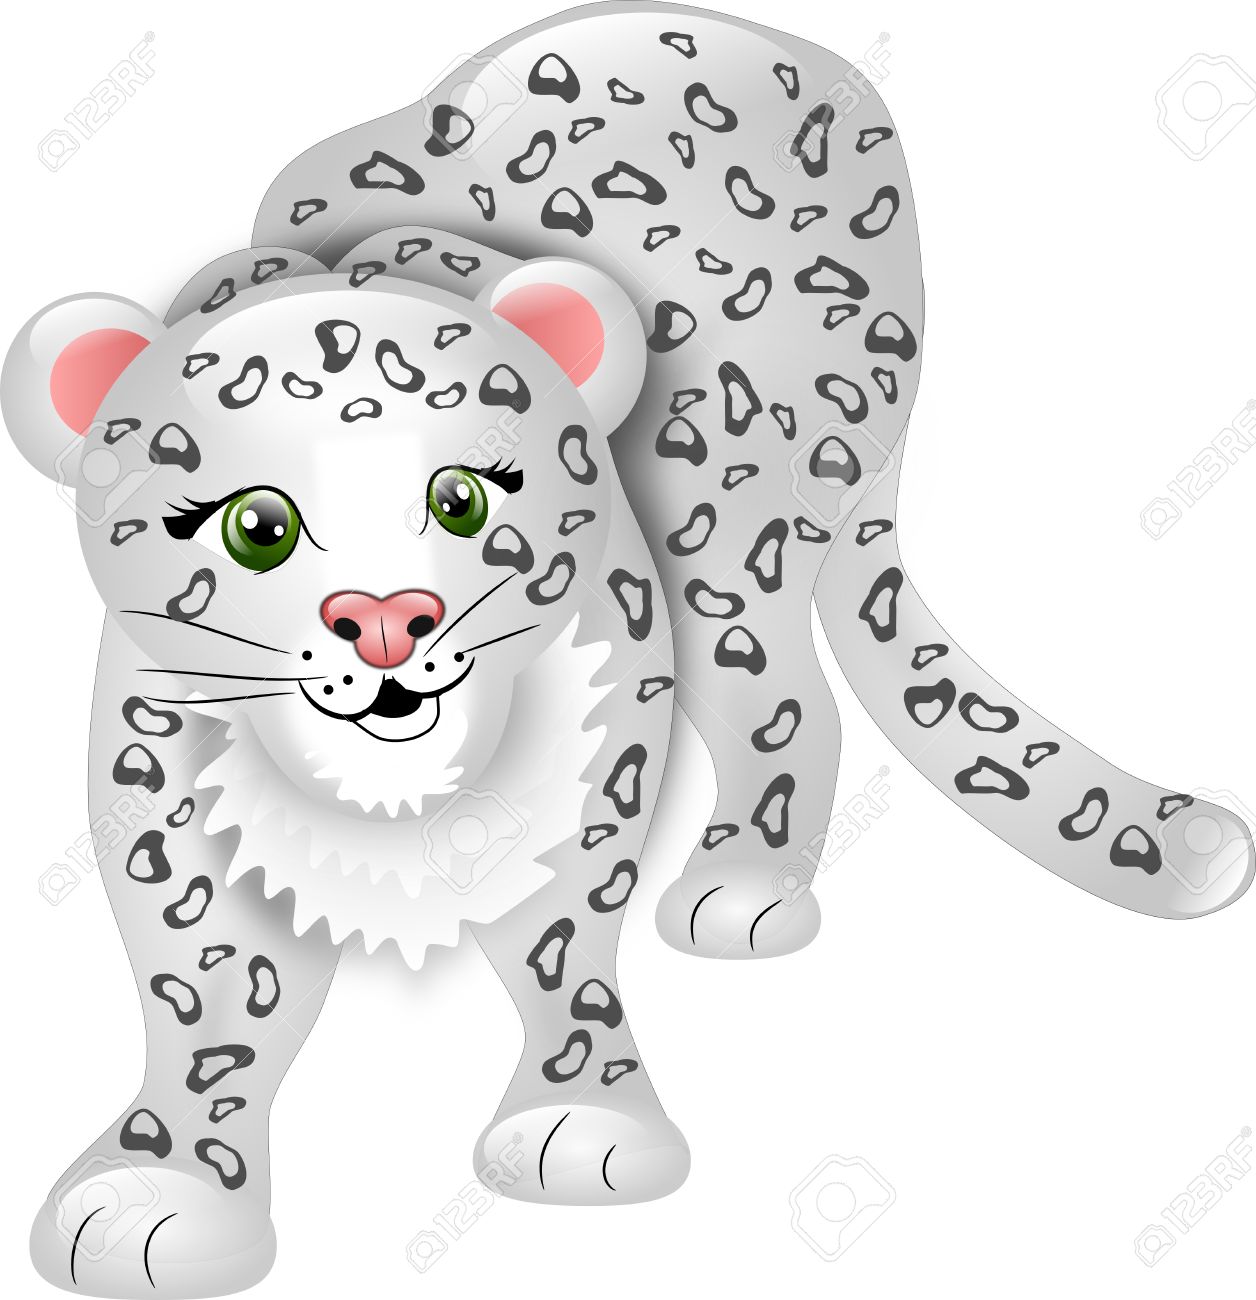 snow leopard: Cartoon snow leopard without background